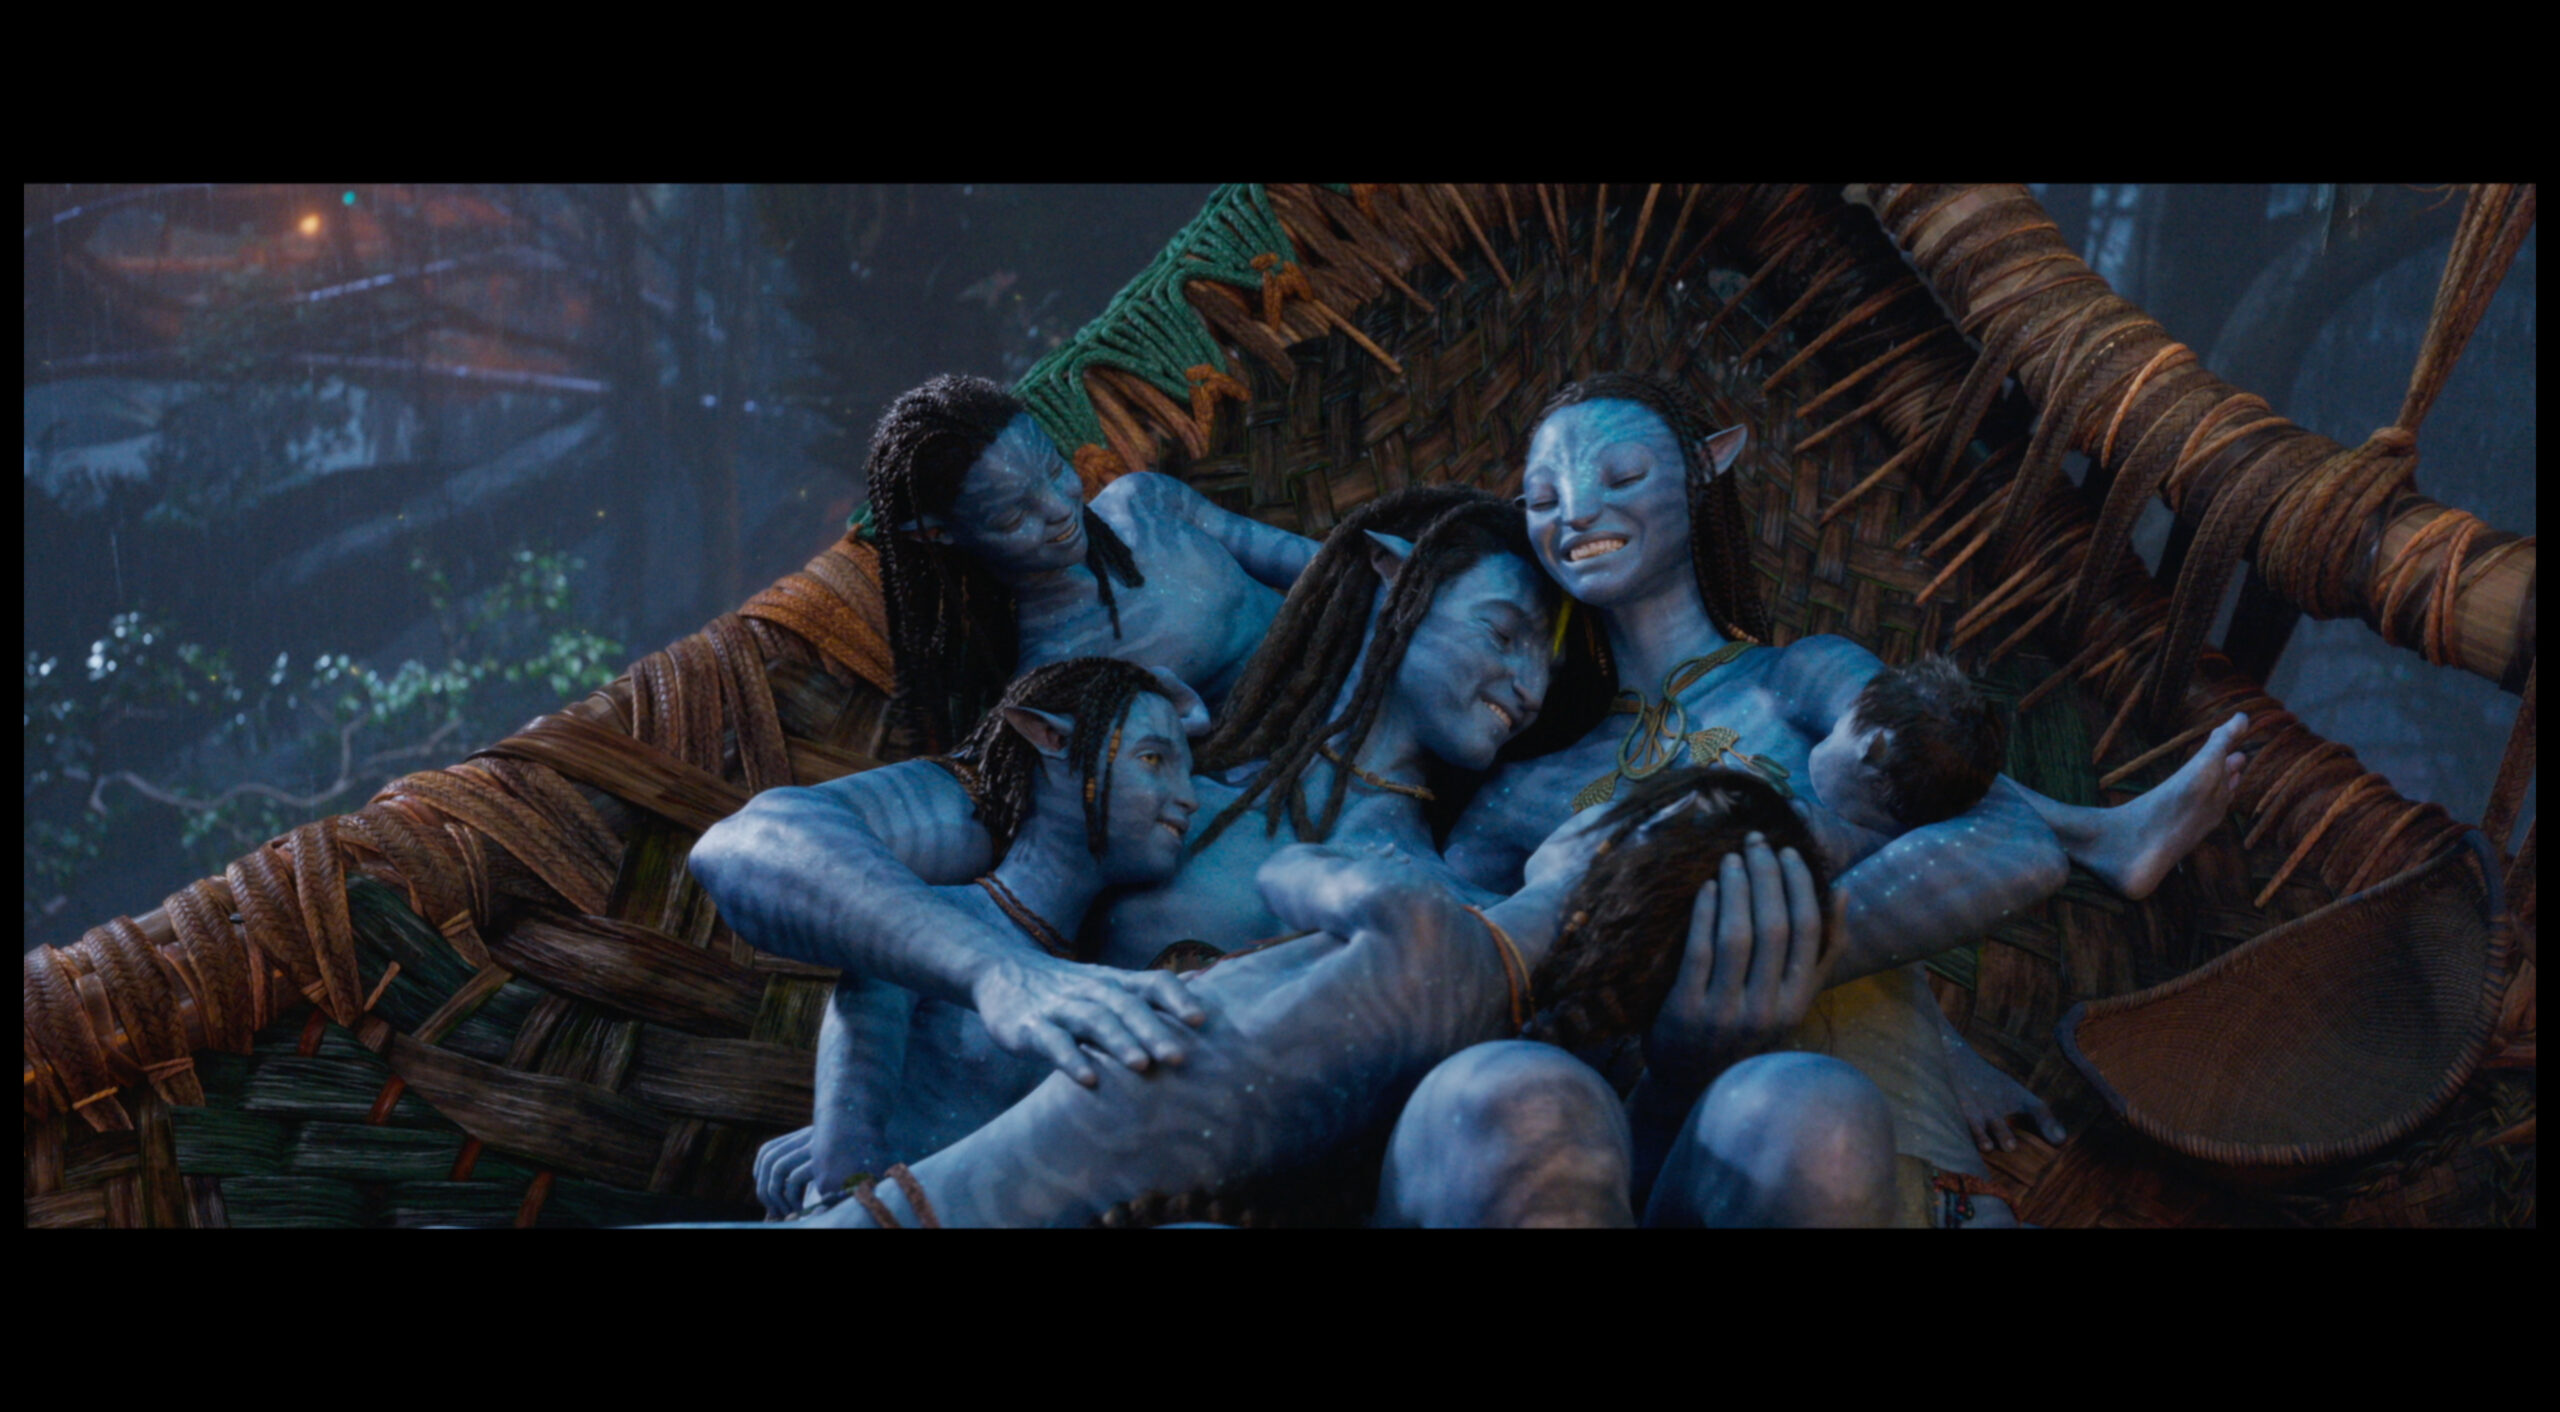 The King's Avatar (Season 1+2) DVD Vol. 1-24 end + Movie SHIP FROM USA DVD